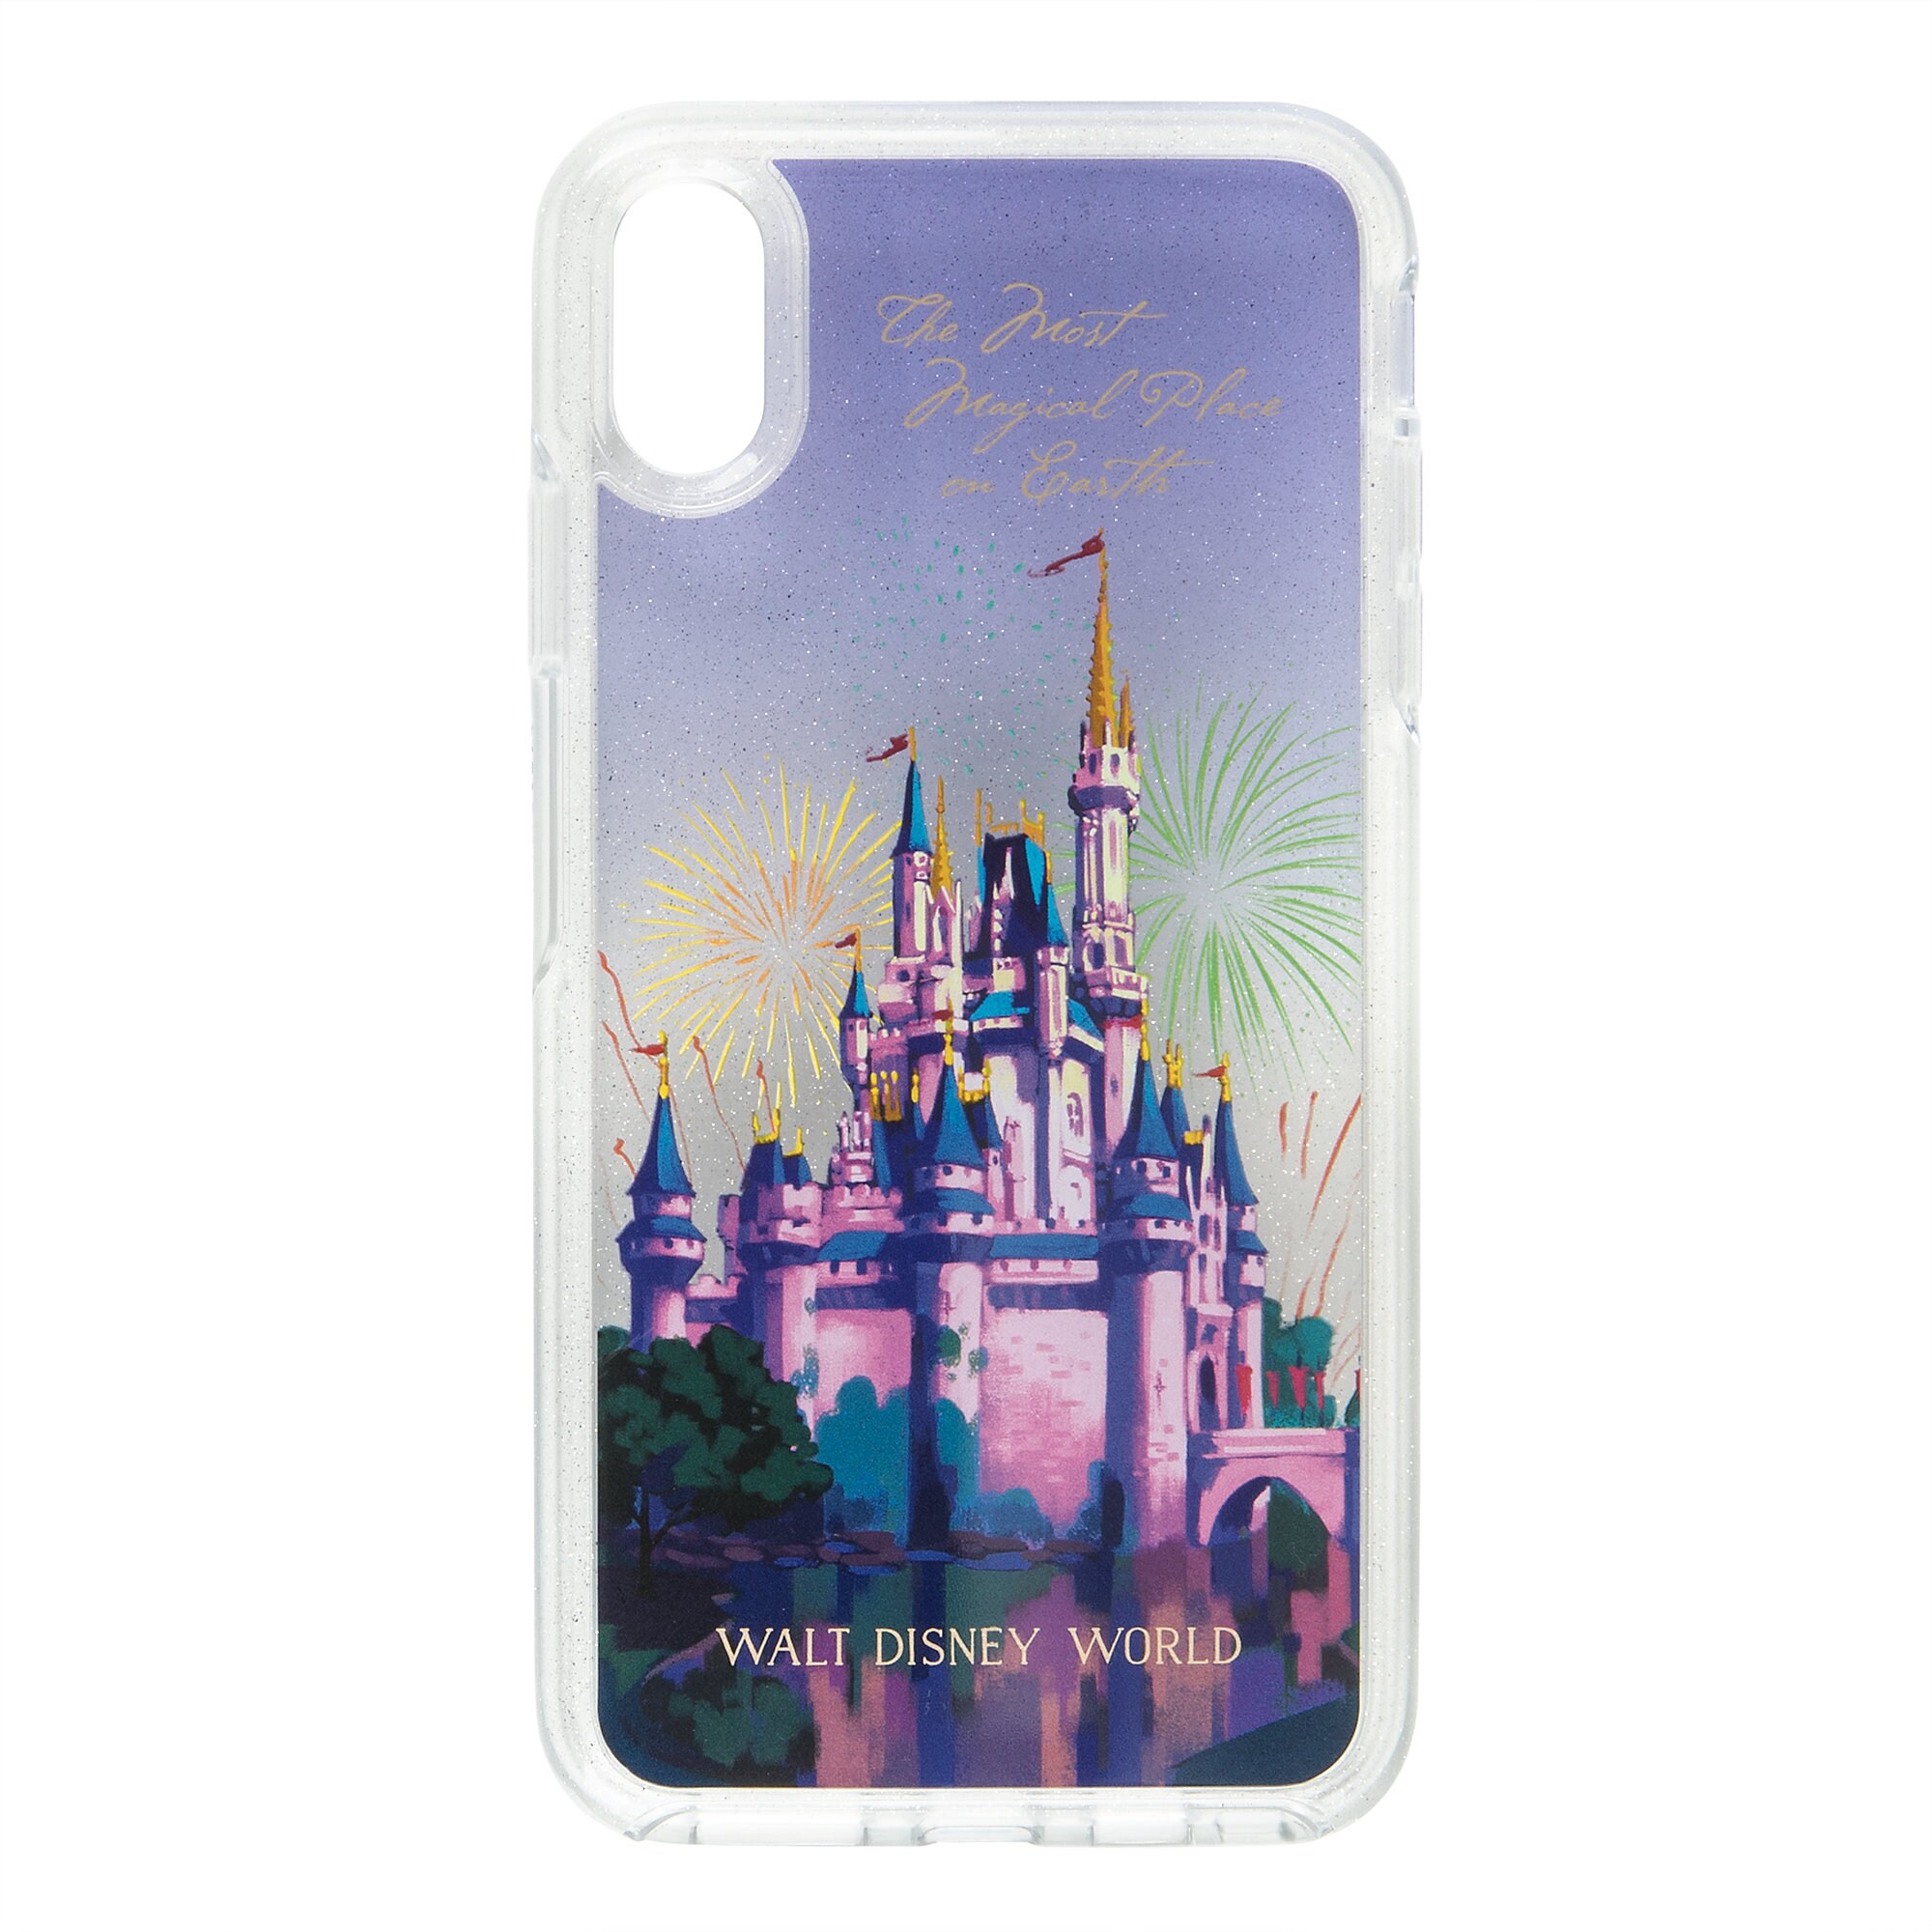 Cinderella Castle iPhone Xs Max Case by OtterBox - Walt Disney World